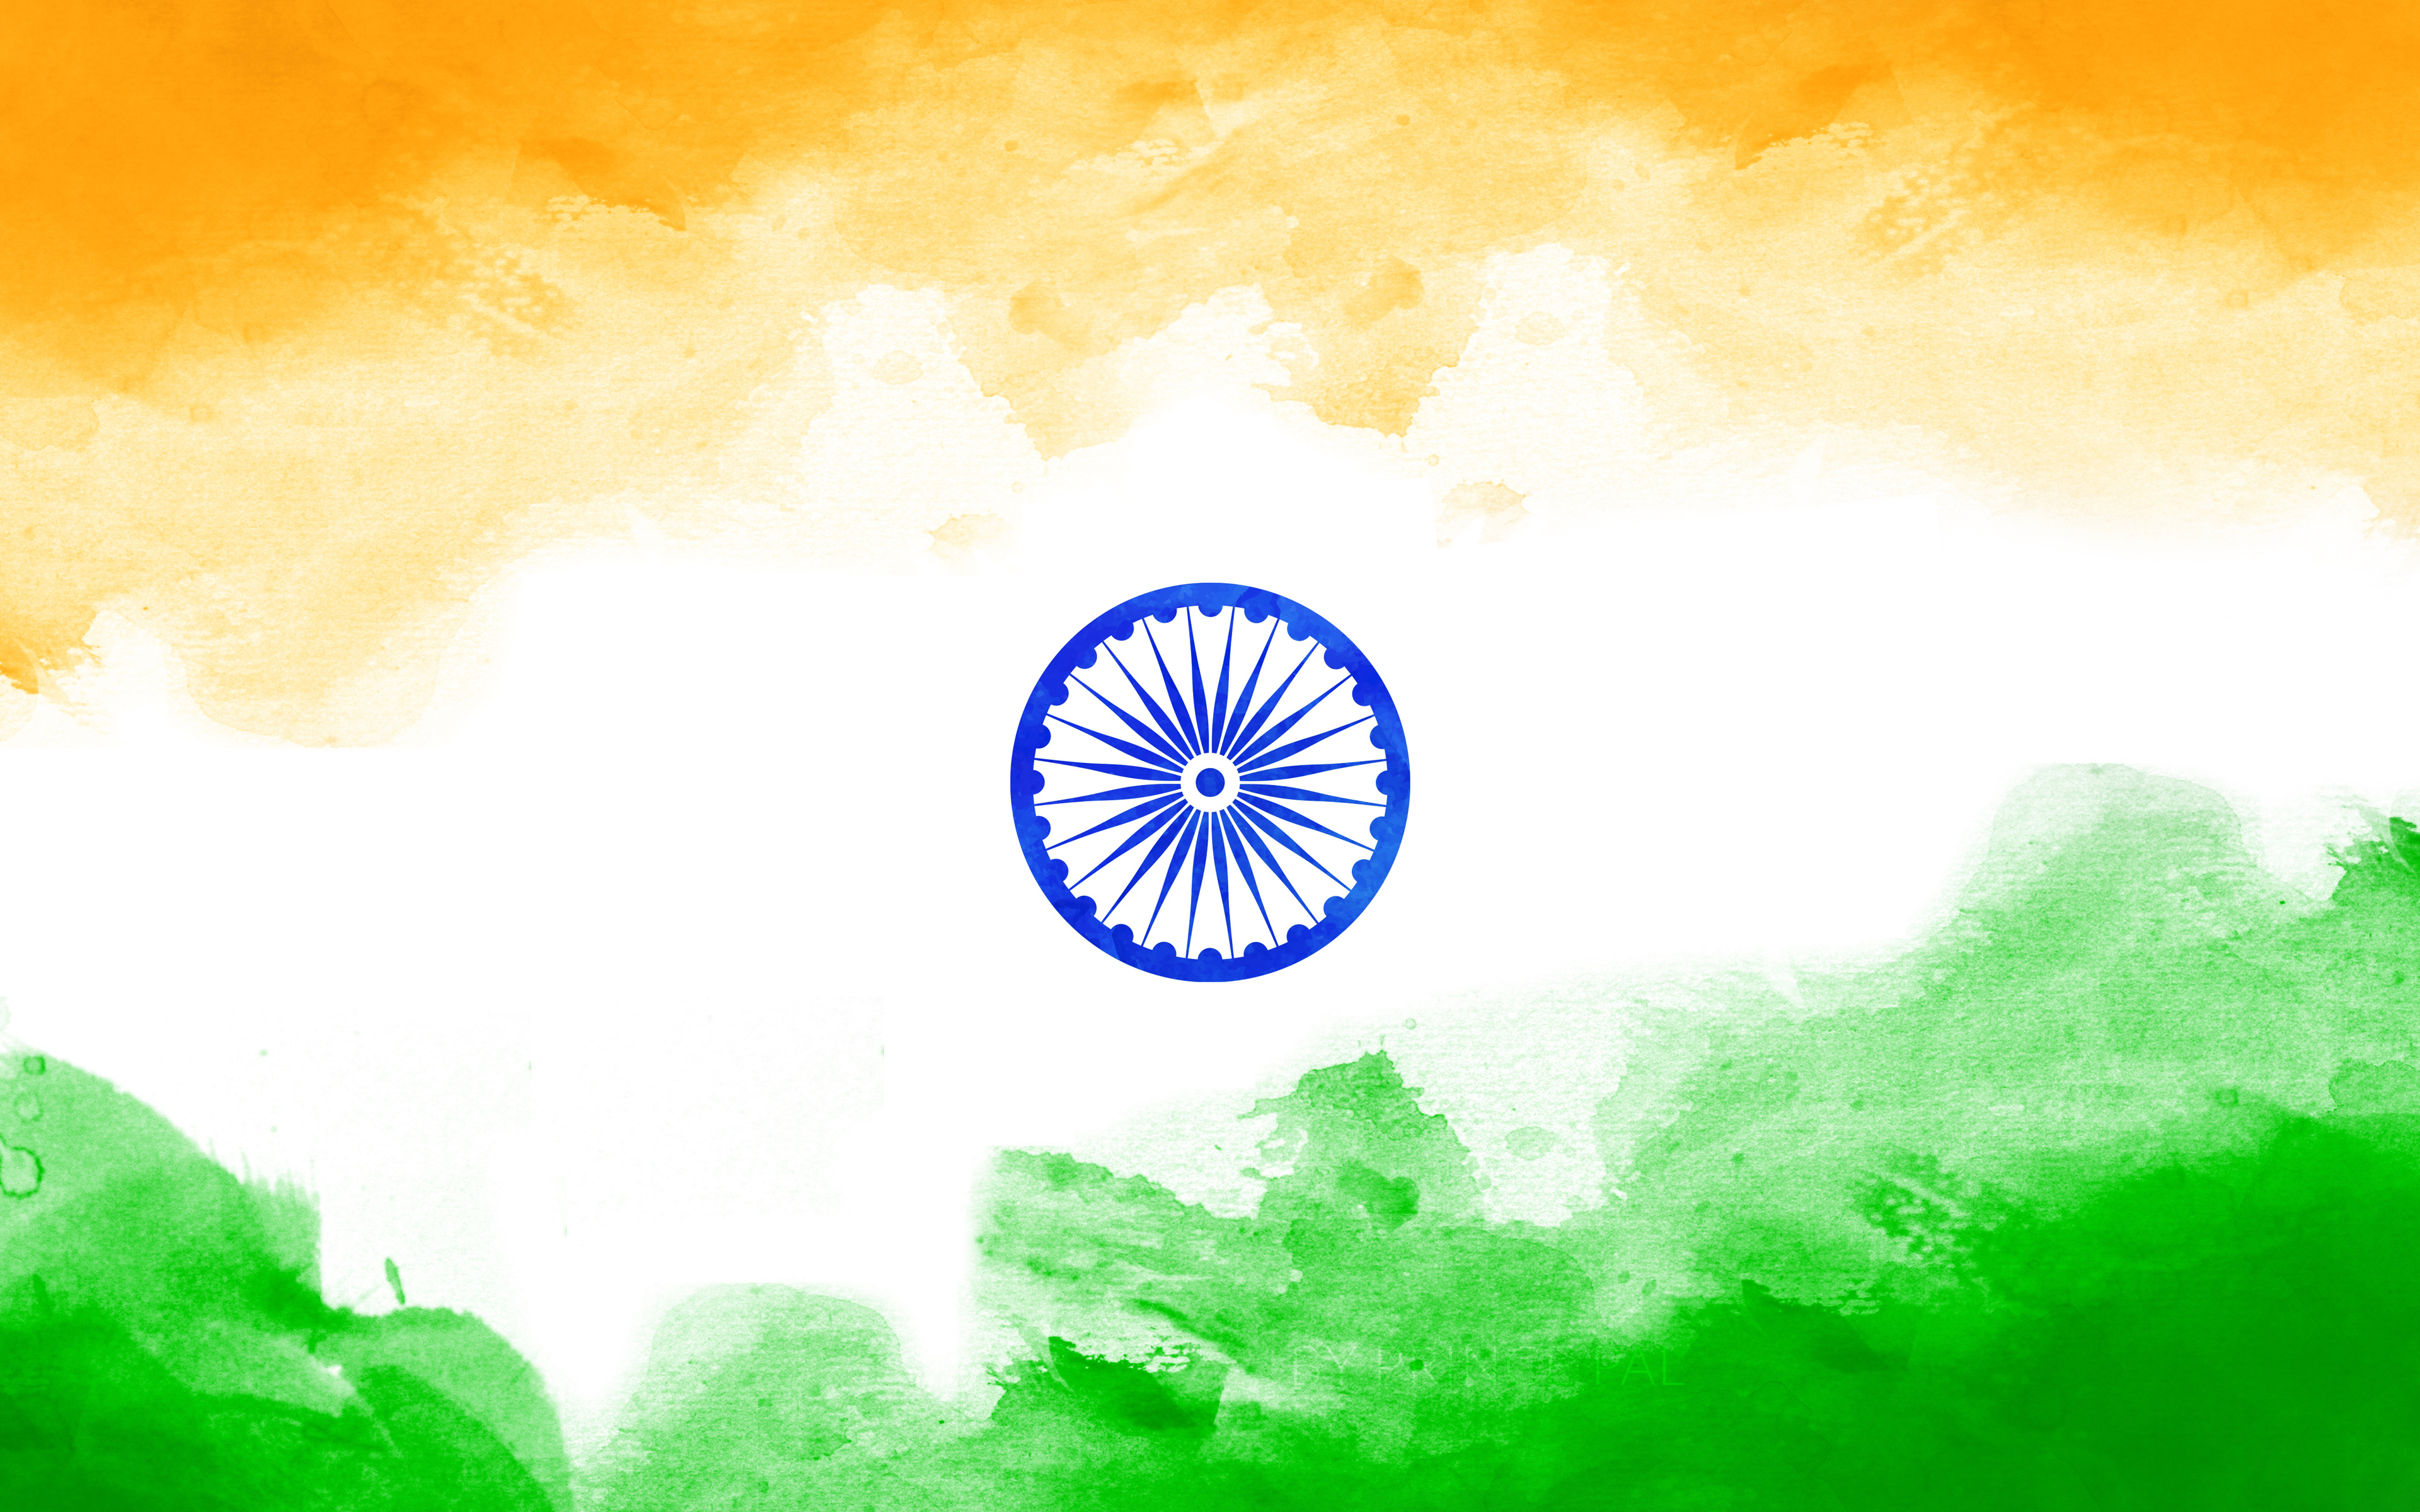 Indian flag tricolor background wallpaper Vector Image